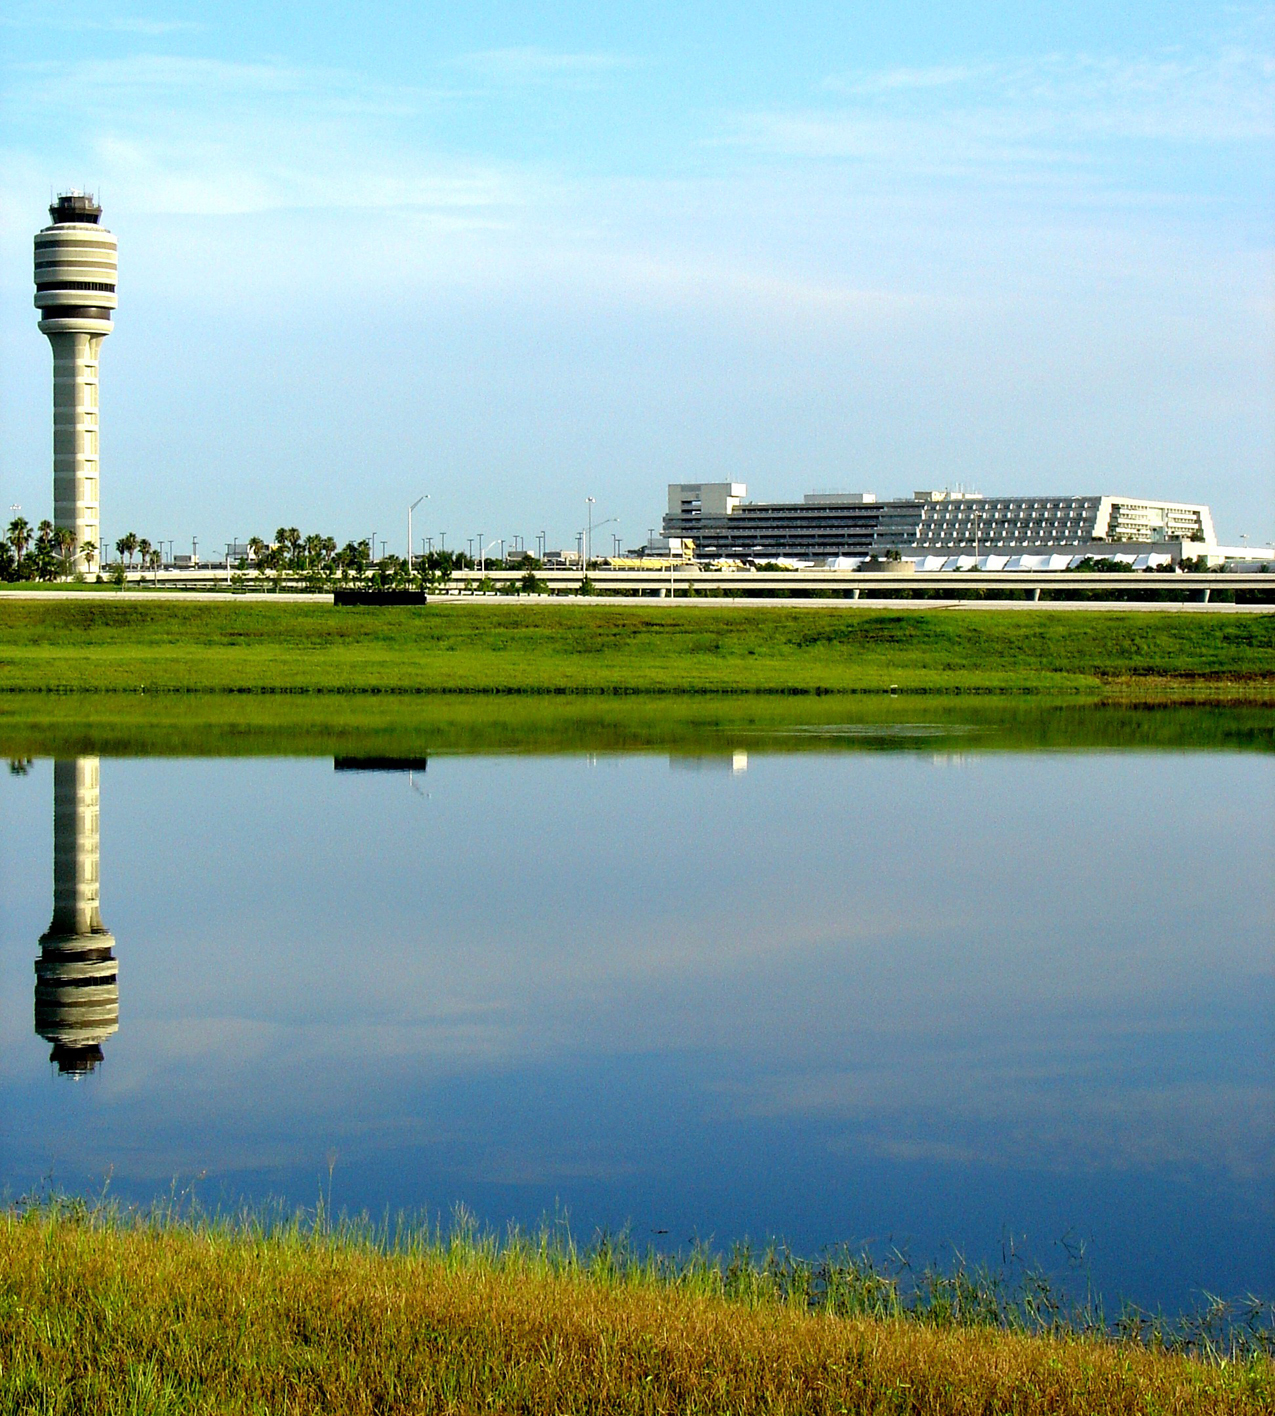 FAA Tower/Terminal Reflected